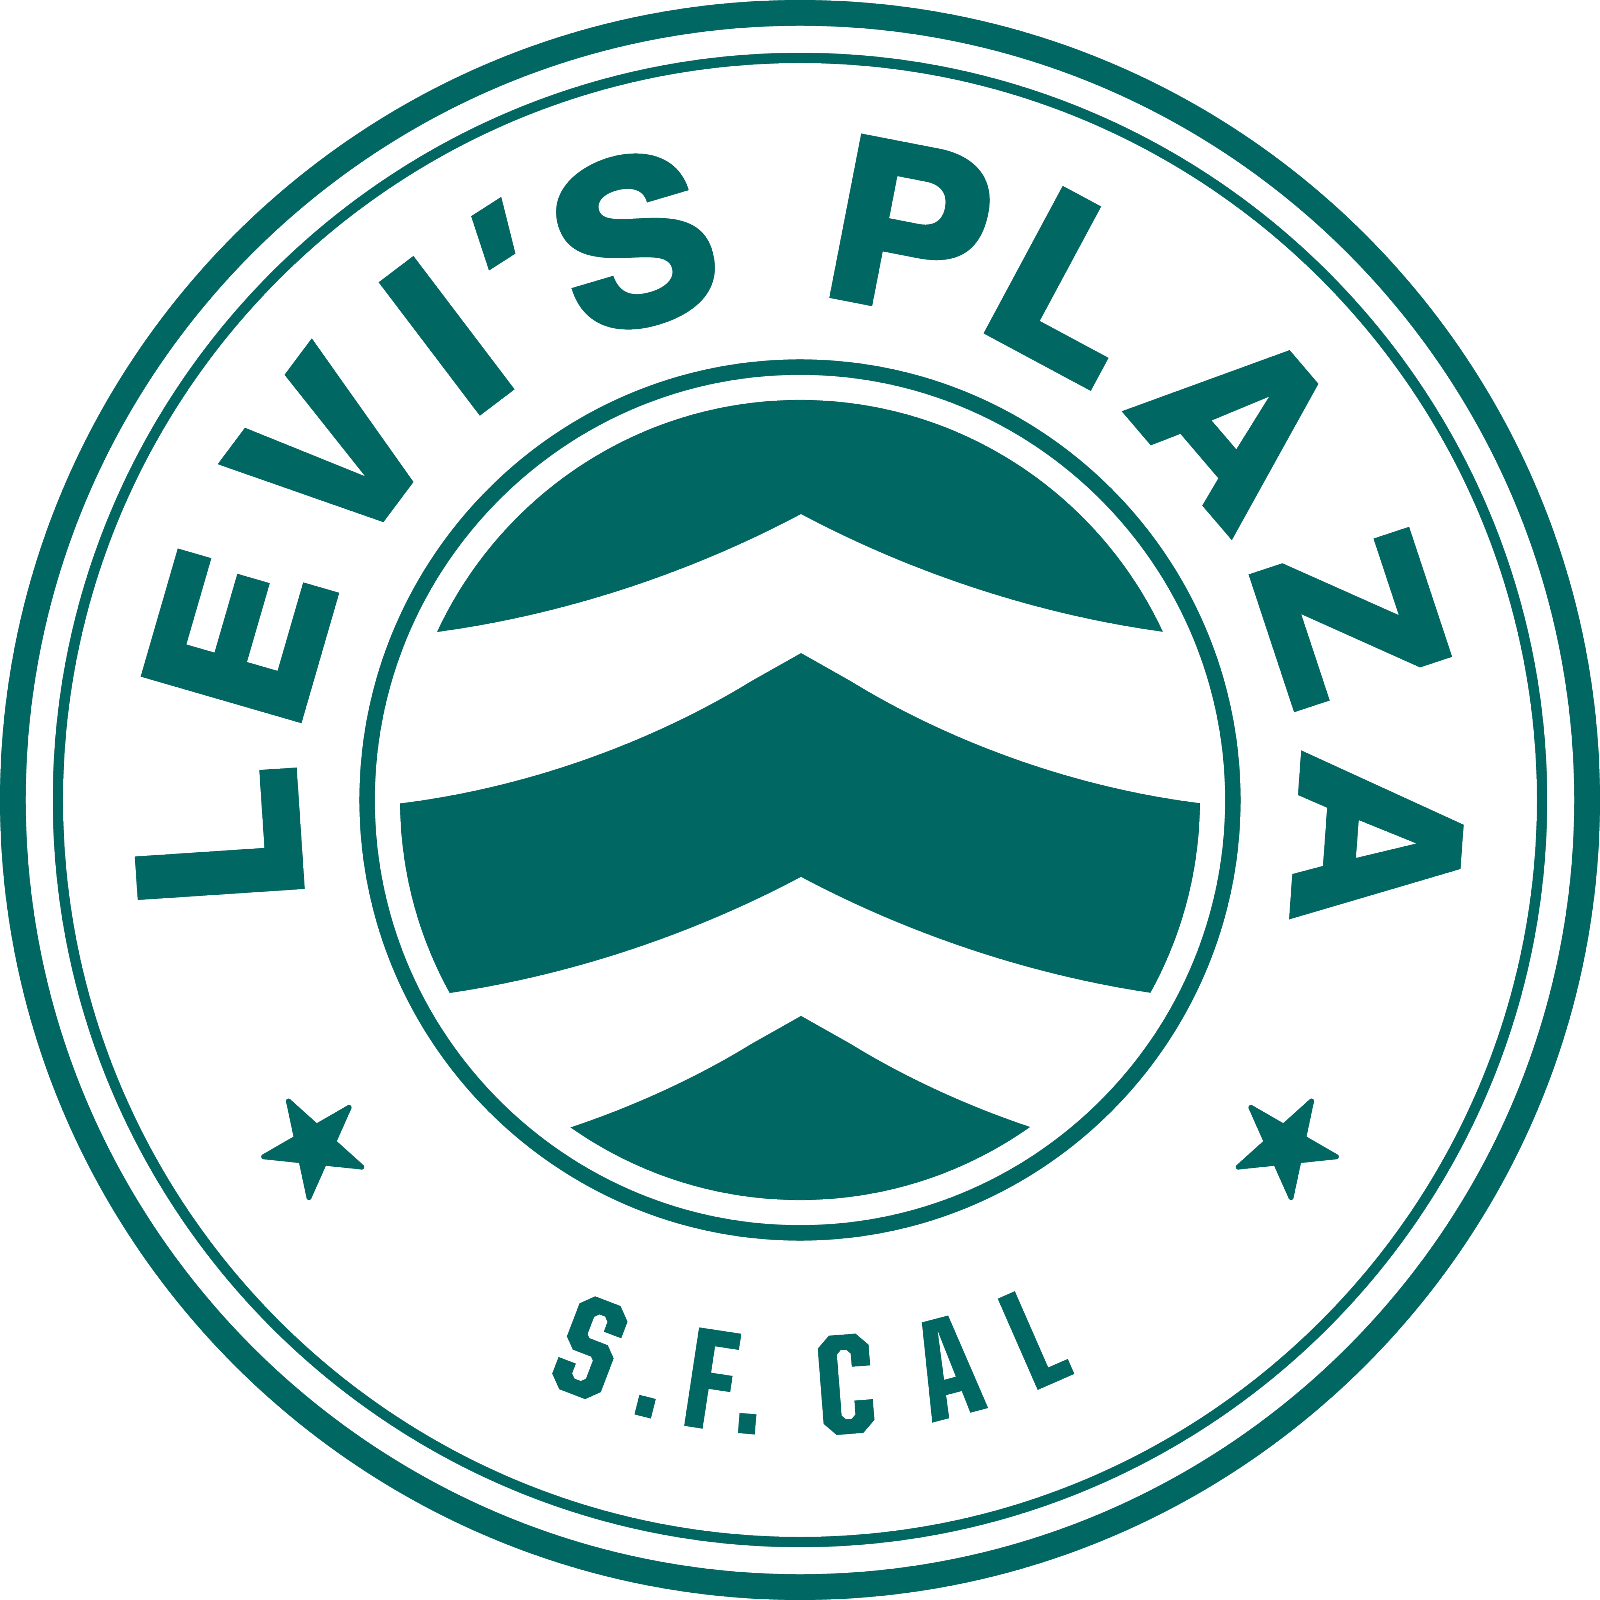 Levi's Plaza logo